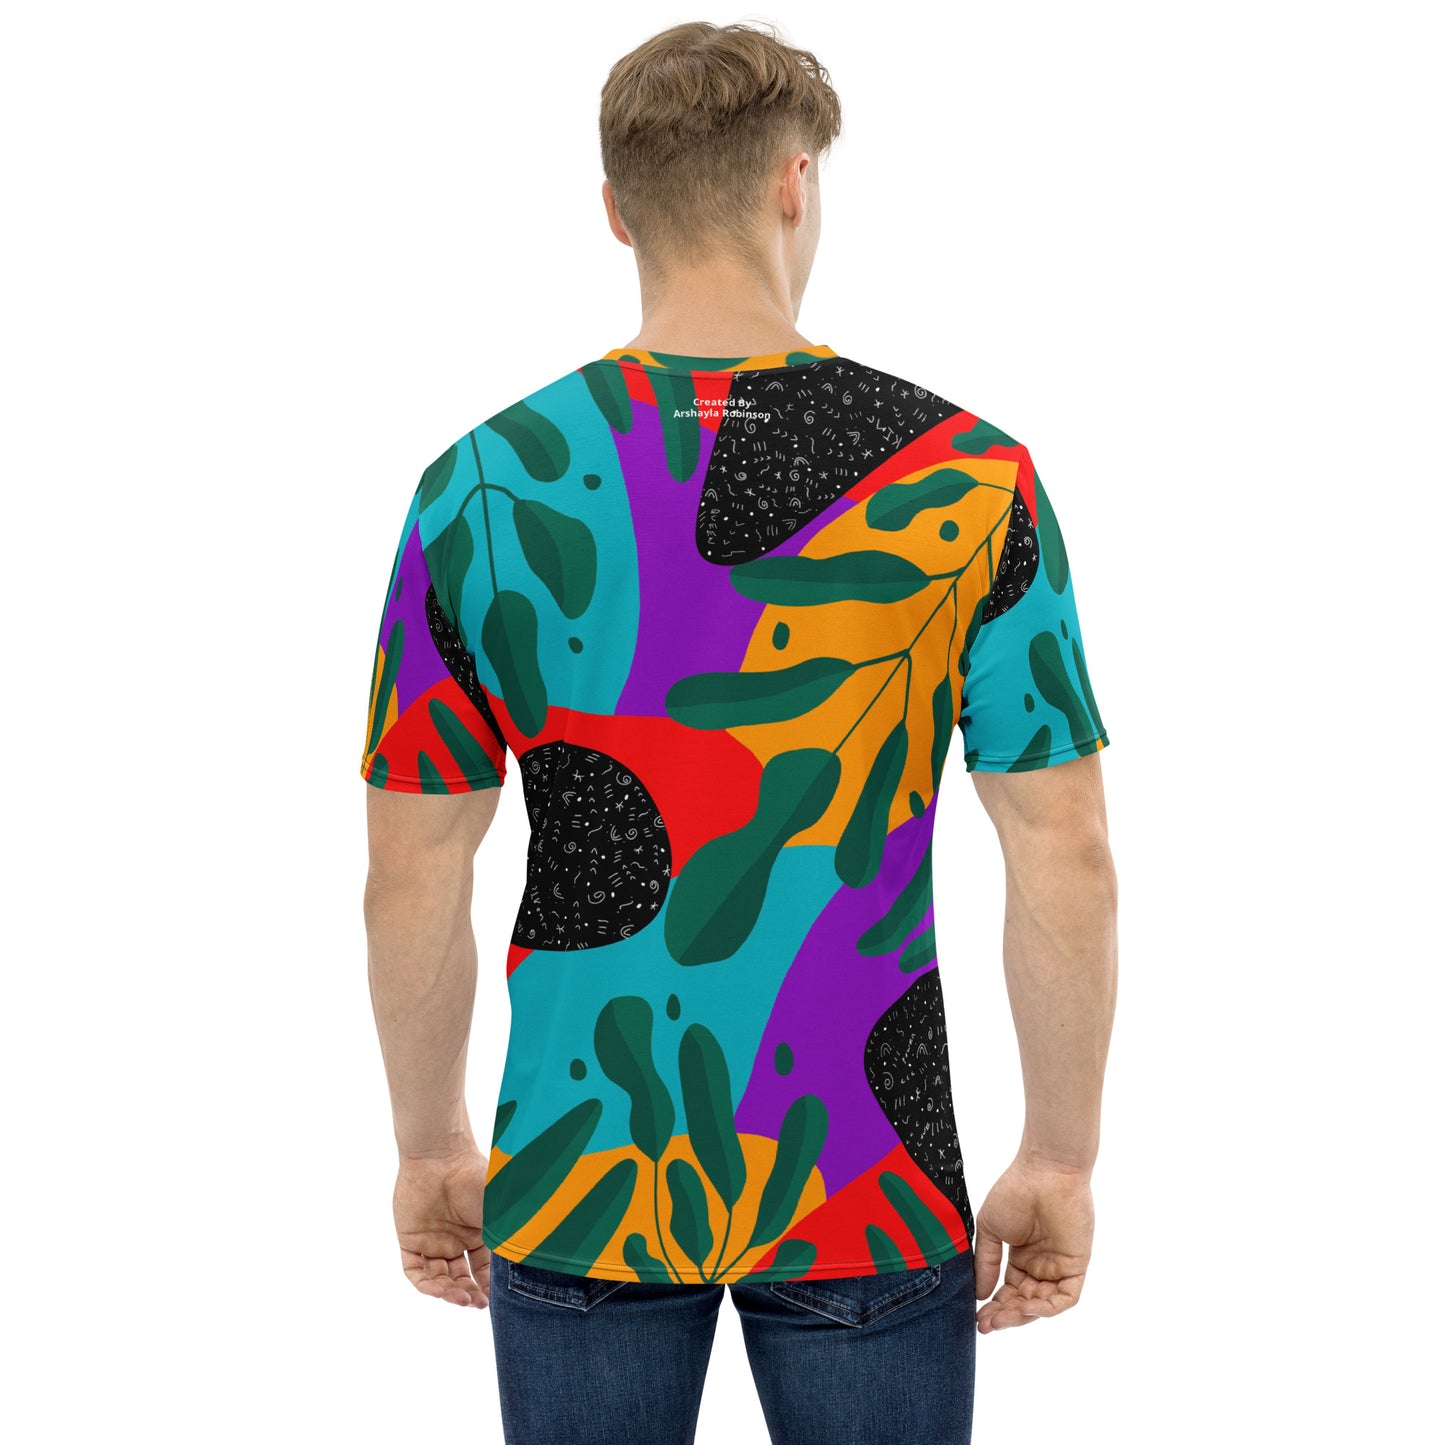 Created To Create Men's T-Shirt